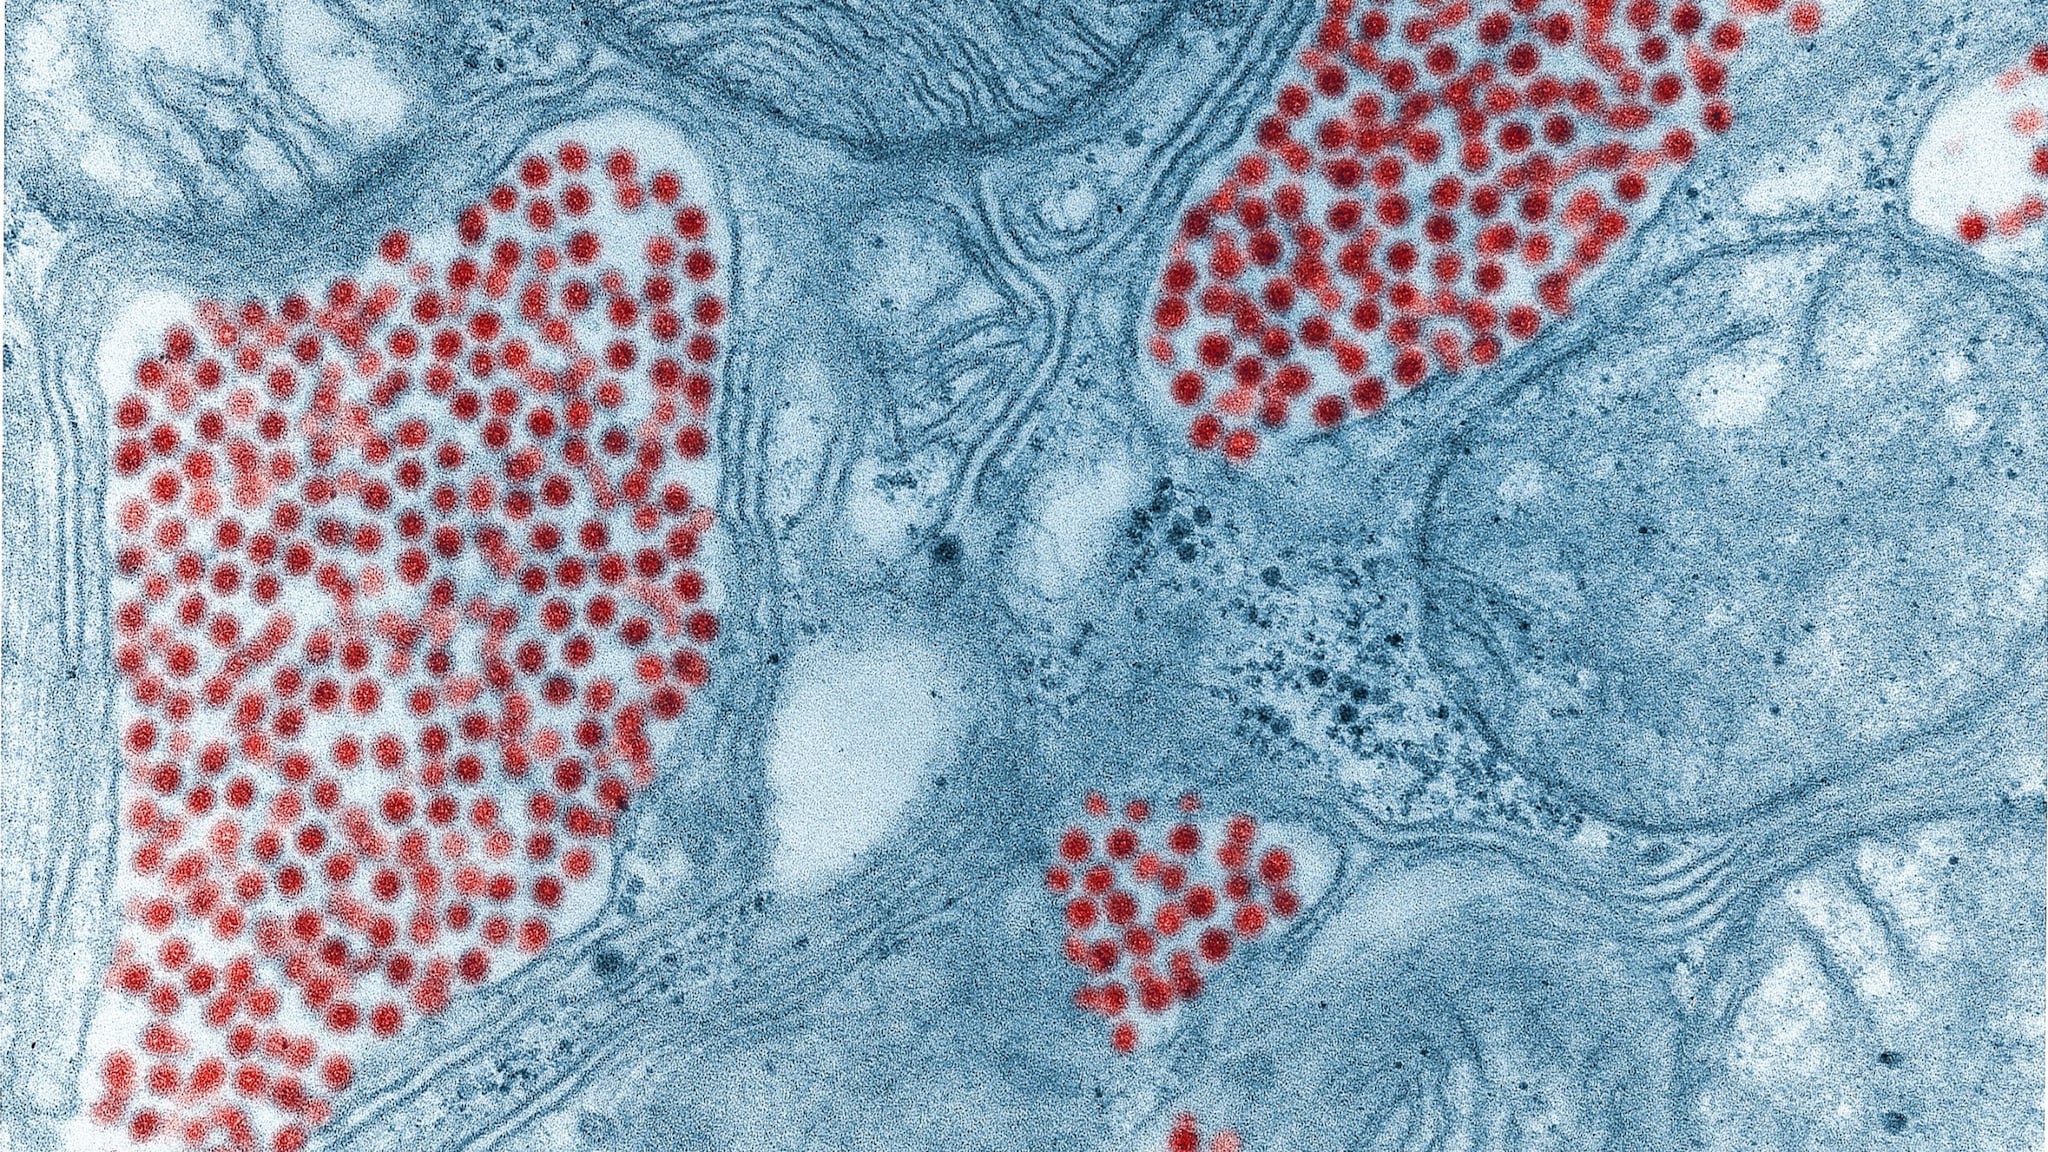 Electron microscope image of eastern equine encephalitis virus